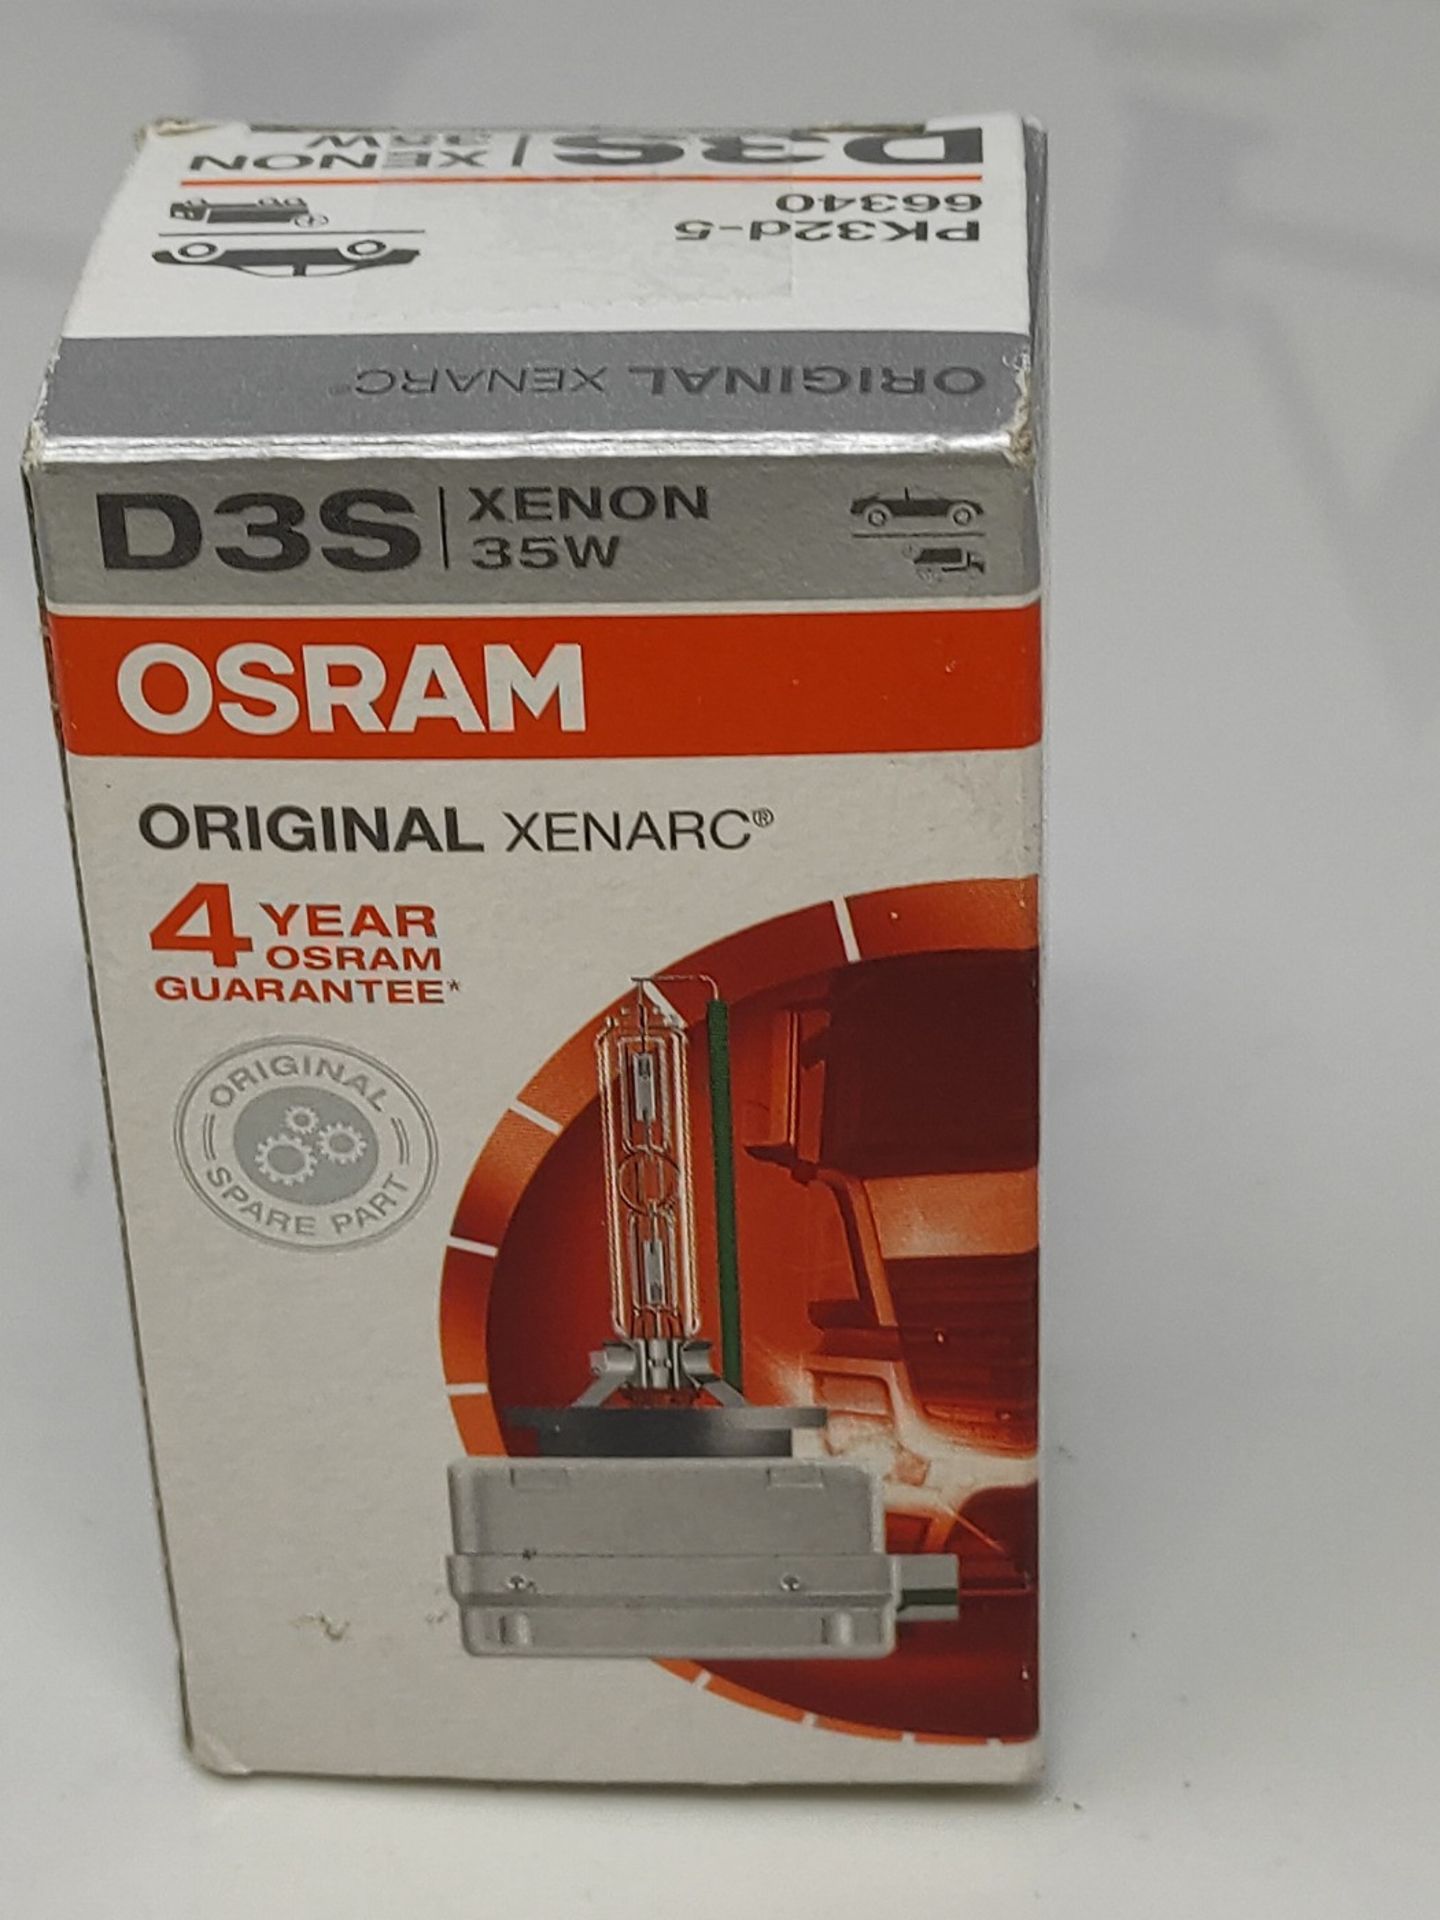 RRP £50.00 Osram XENARC ORIGINAL D3S HID Xenon bulb, discharge lamp, original equipment manufactu - Image 2 of 3